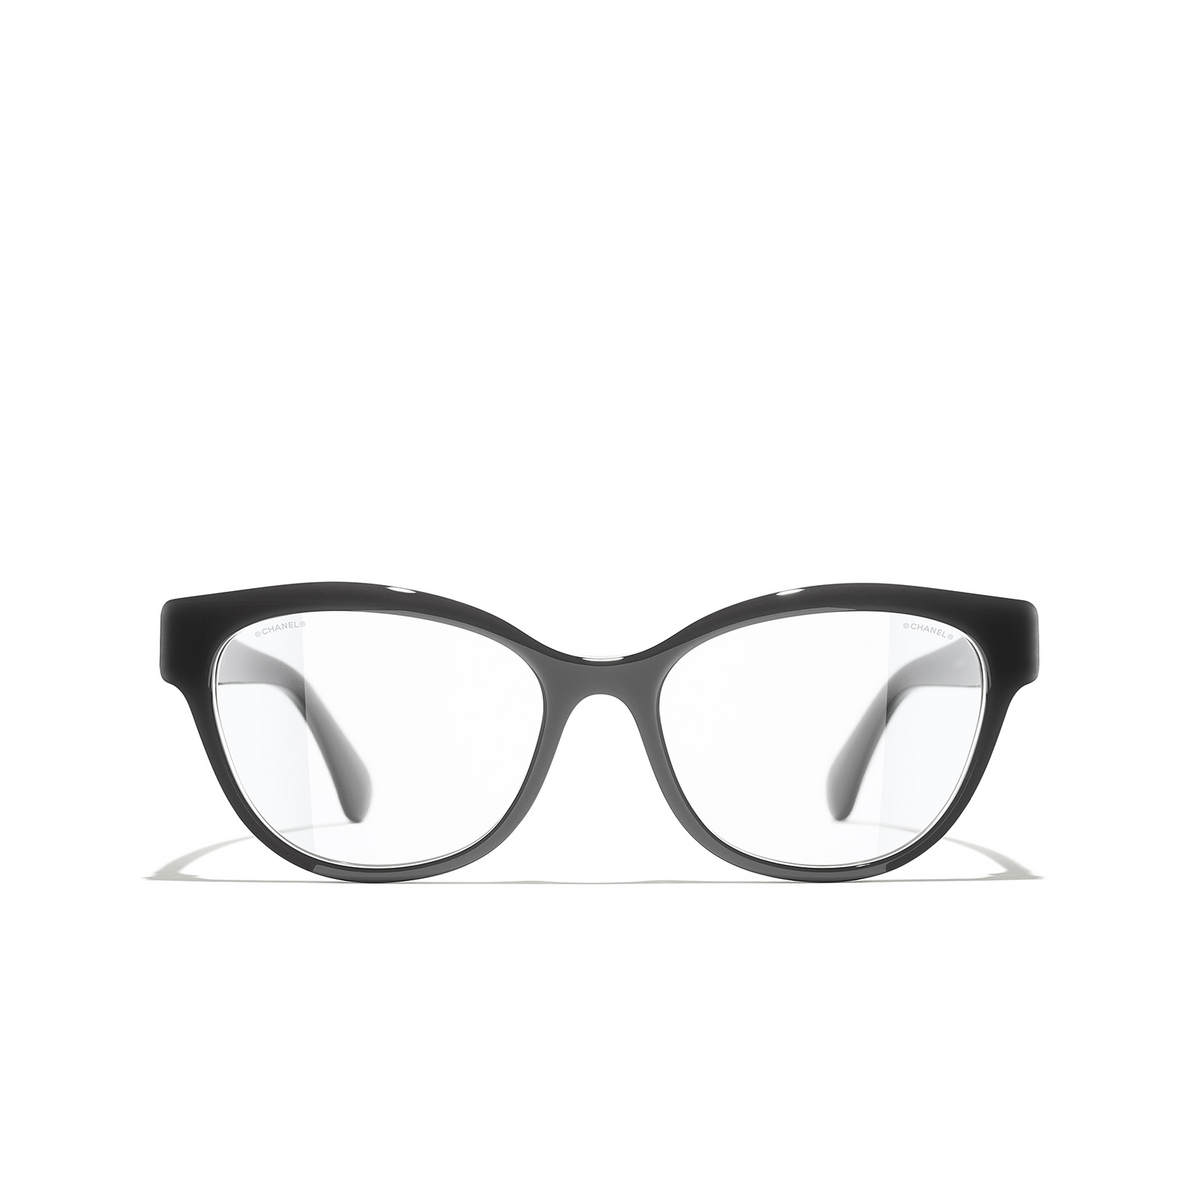 CHANEL square Eyeglasses 1716 Dark Grey - front view